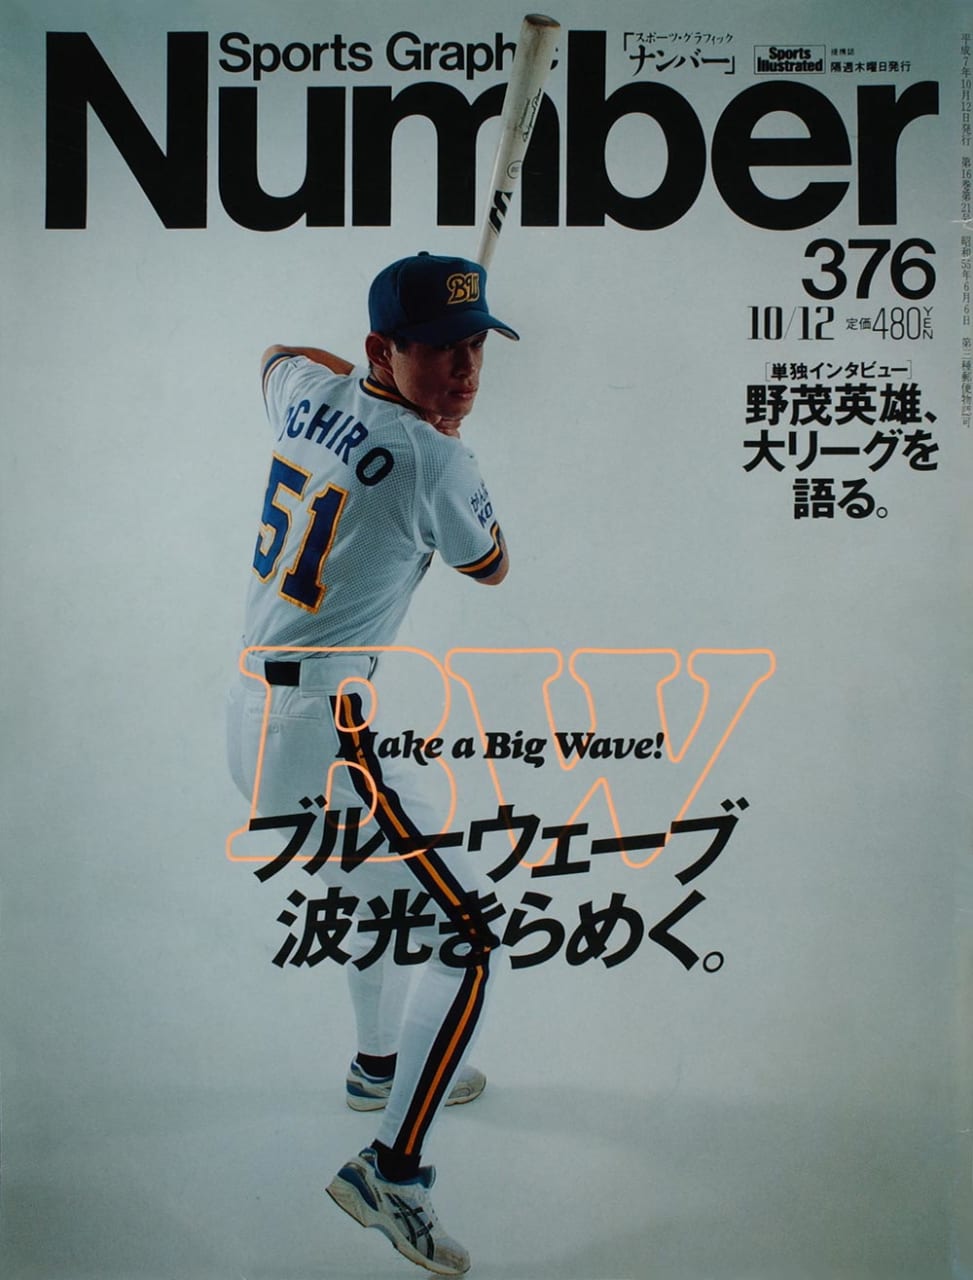 Sports Graphic Number 376号
1995年9月28日発売
表紙撮影：松尾哲